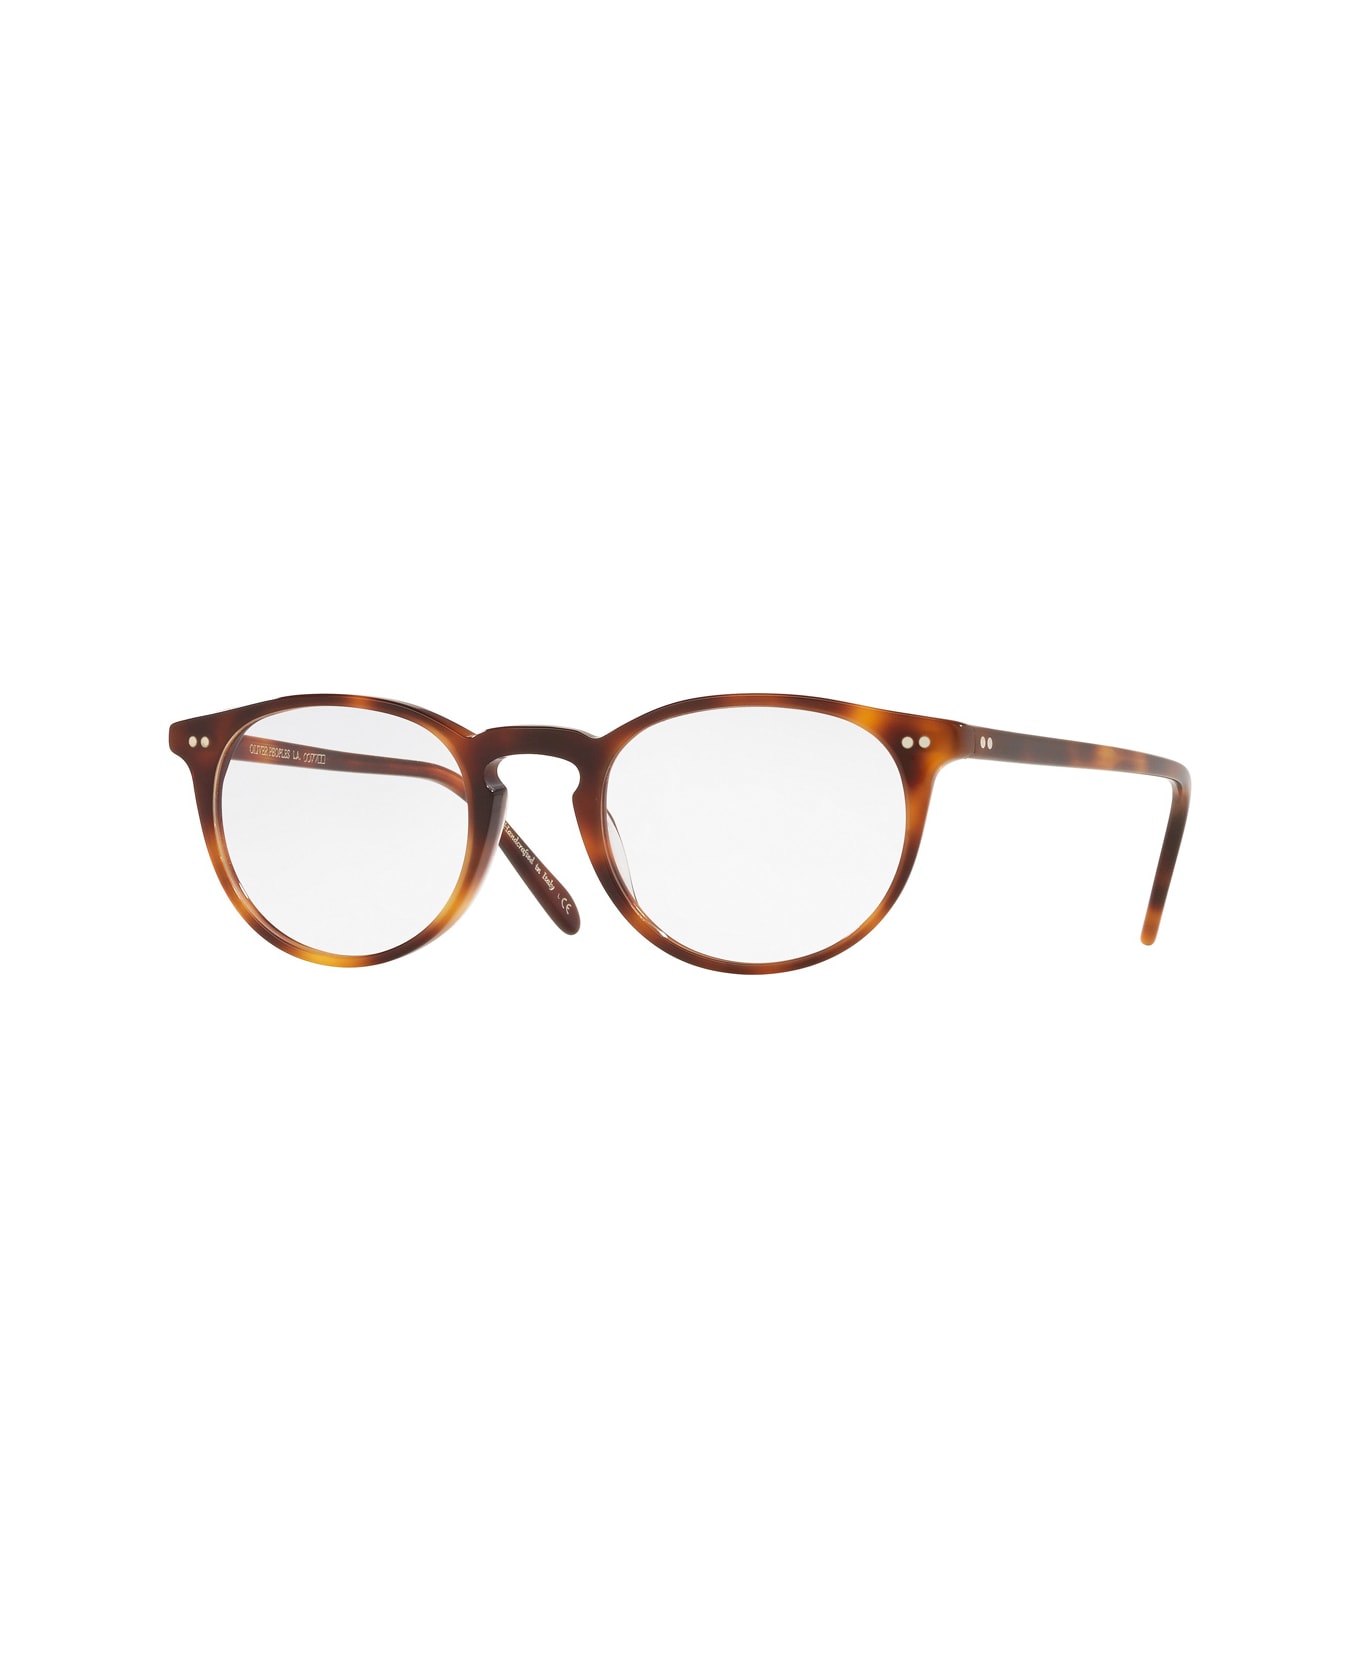 Oliver Peoples Ov5004 Vista 1007 Glasses - Arancione